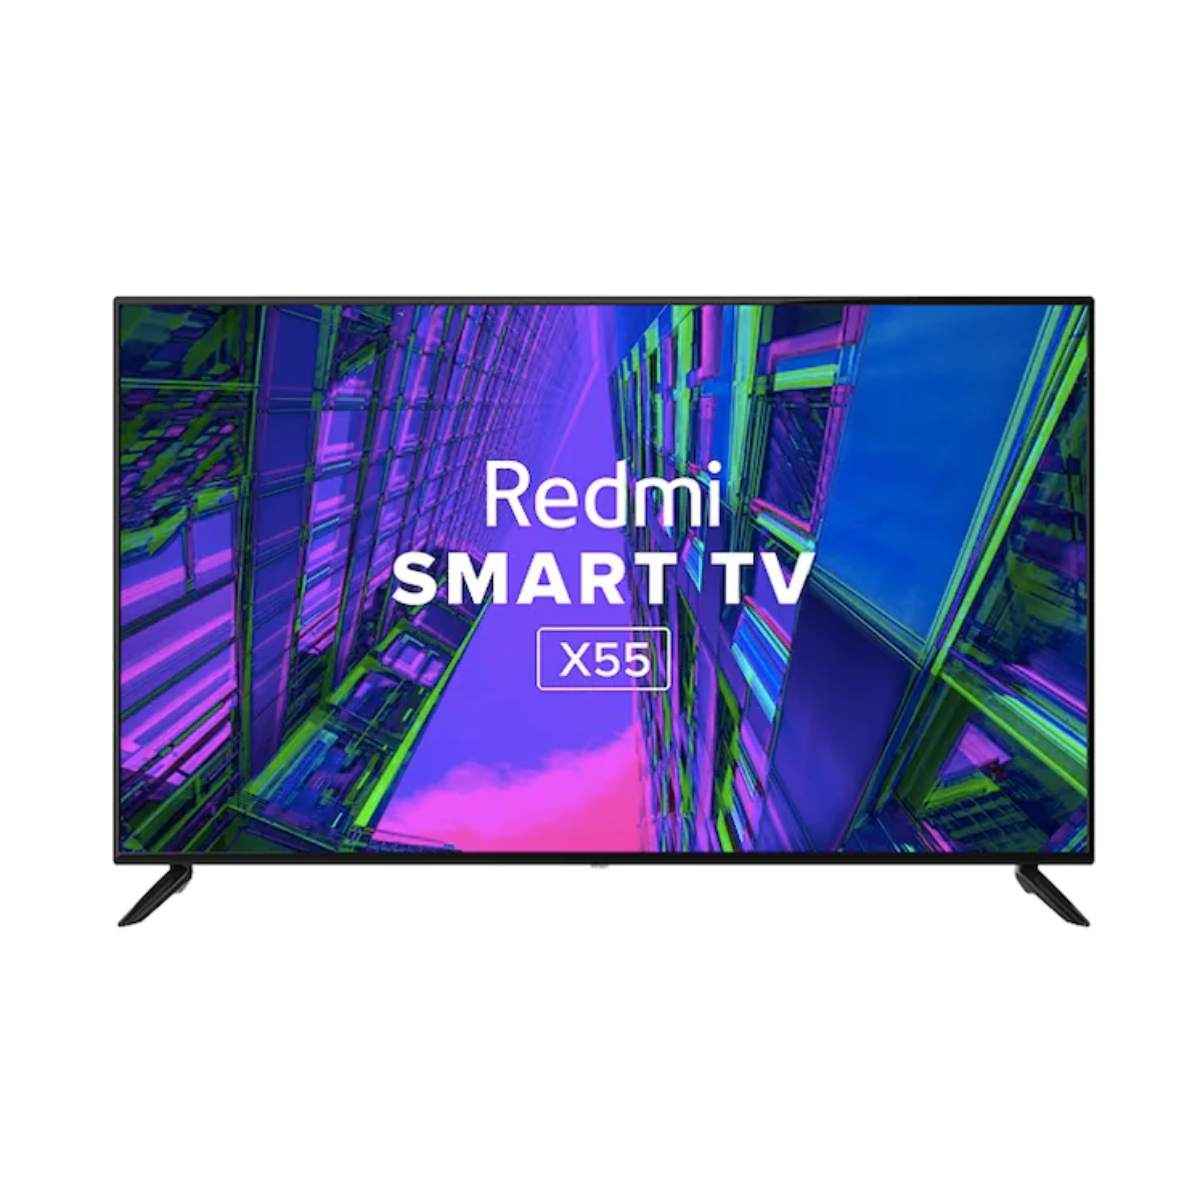 Xiaomi Redmi 55-inch Smart LED TV X55